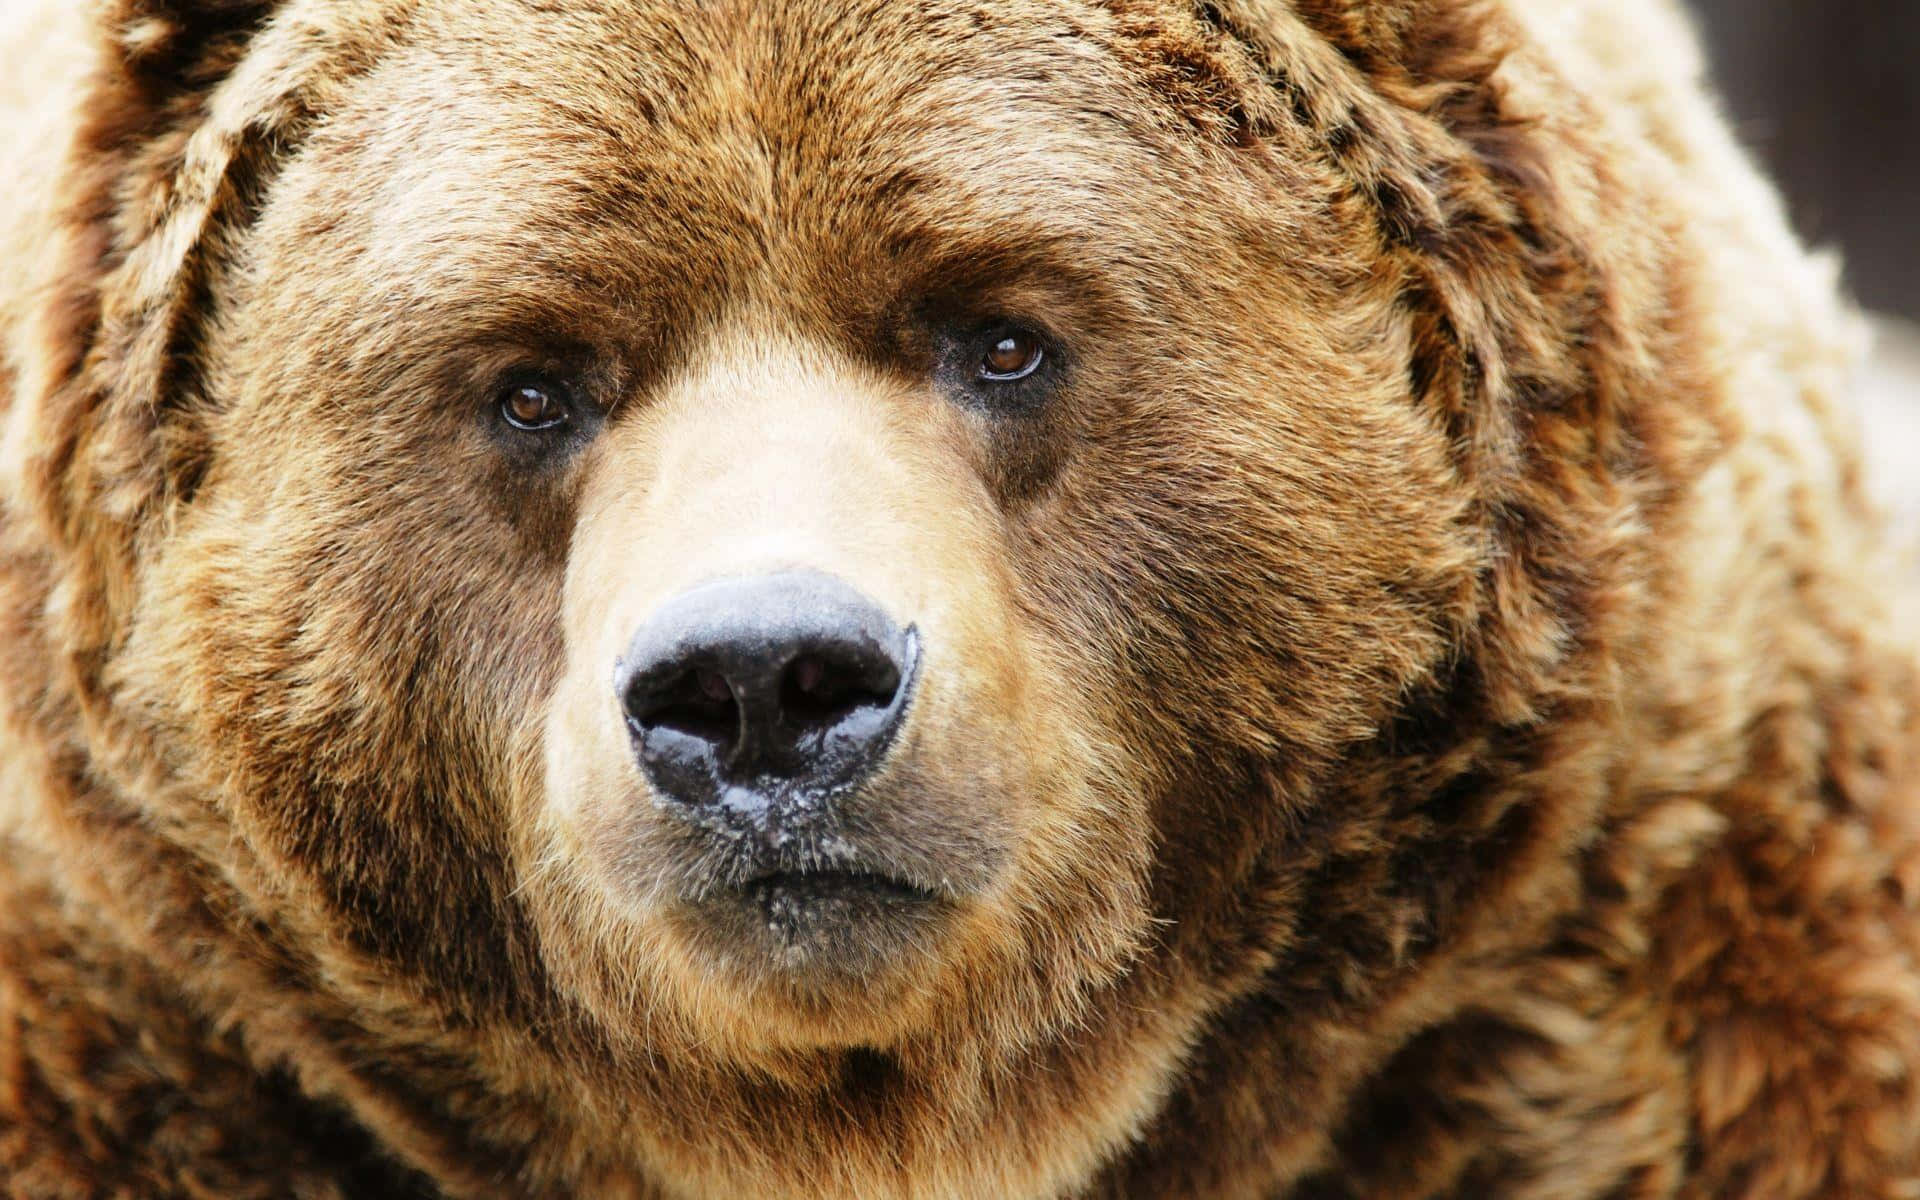 Majestic Brown Bear in its Natural Habitat